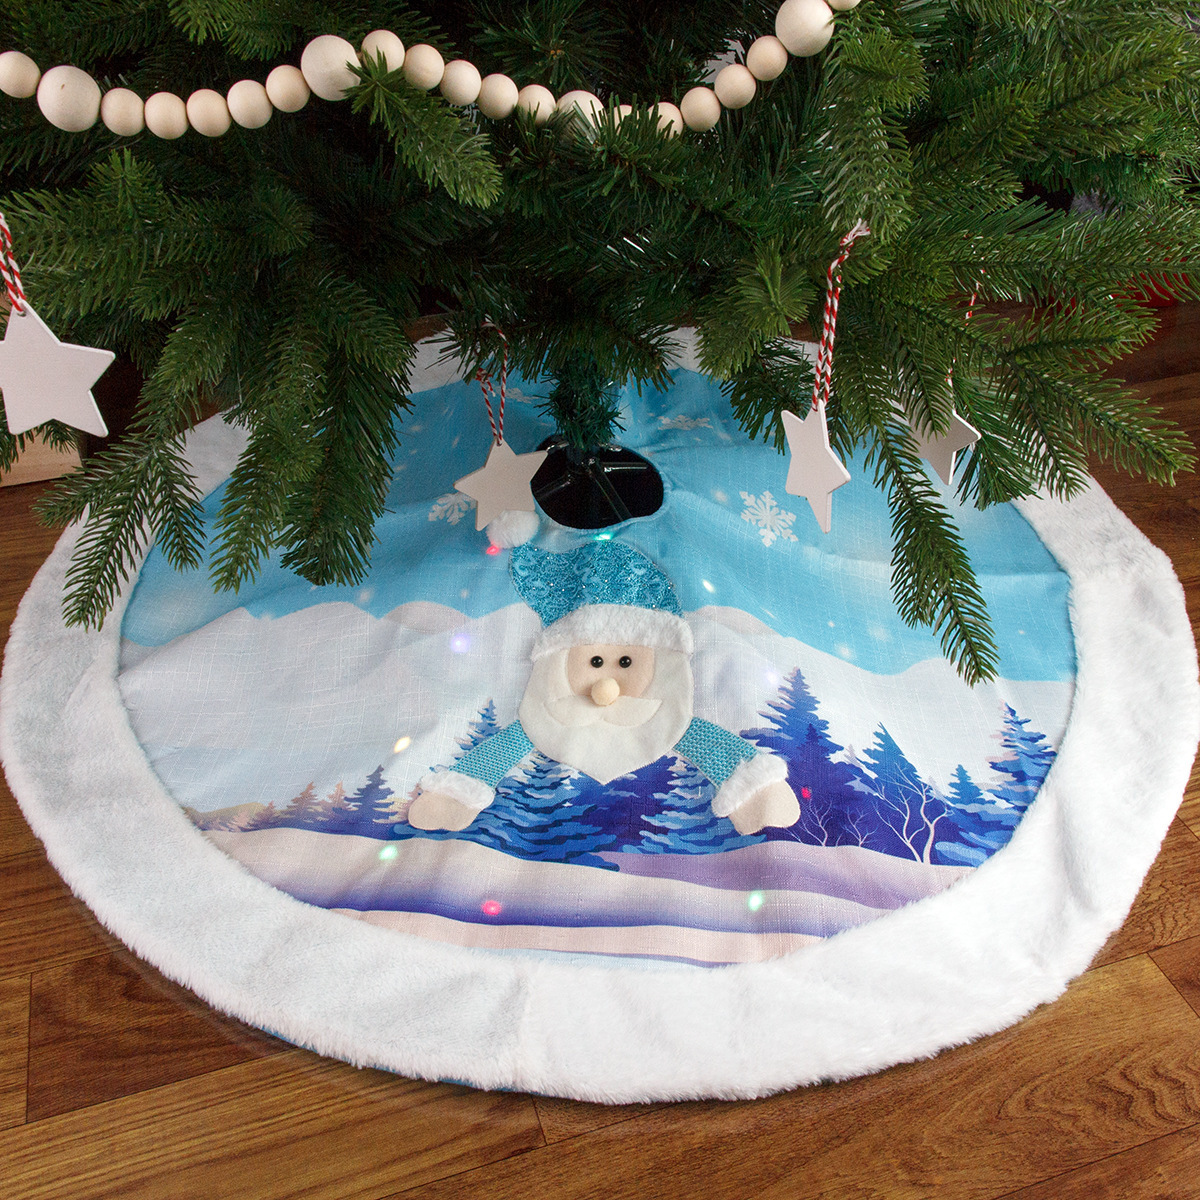 Christmas Decorations Light-Emitting Christmas-Tree Skirt 108cm Old Snowman Shiny Decorative Christmas Tree Apron with Lights